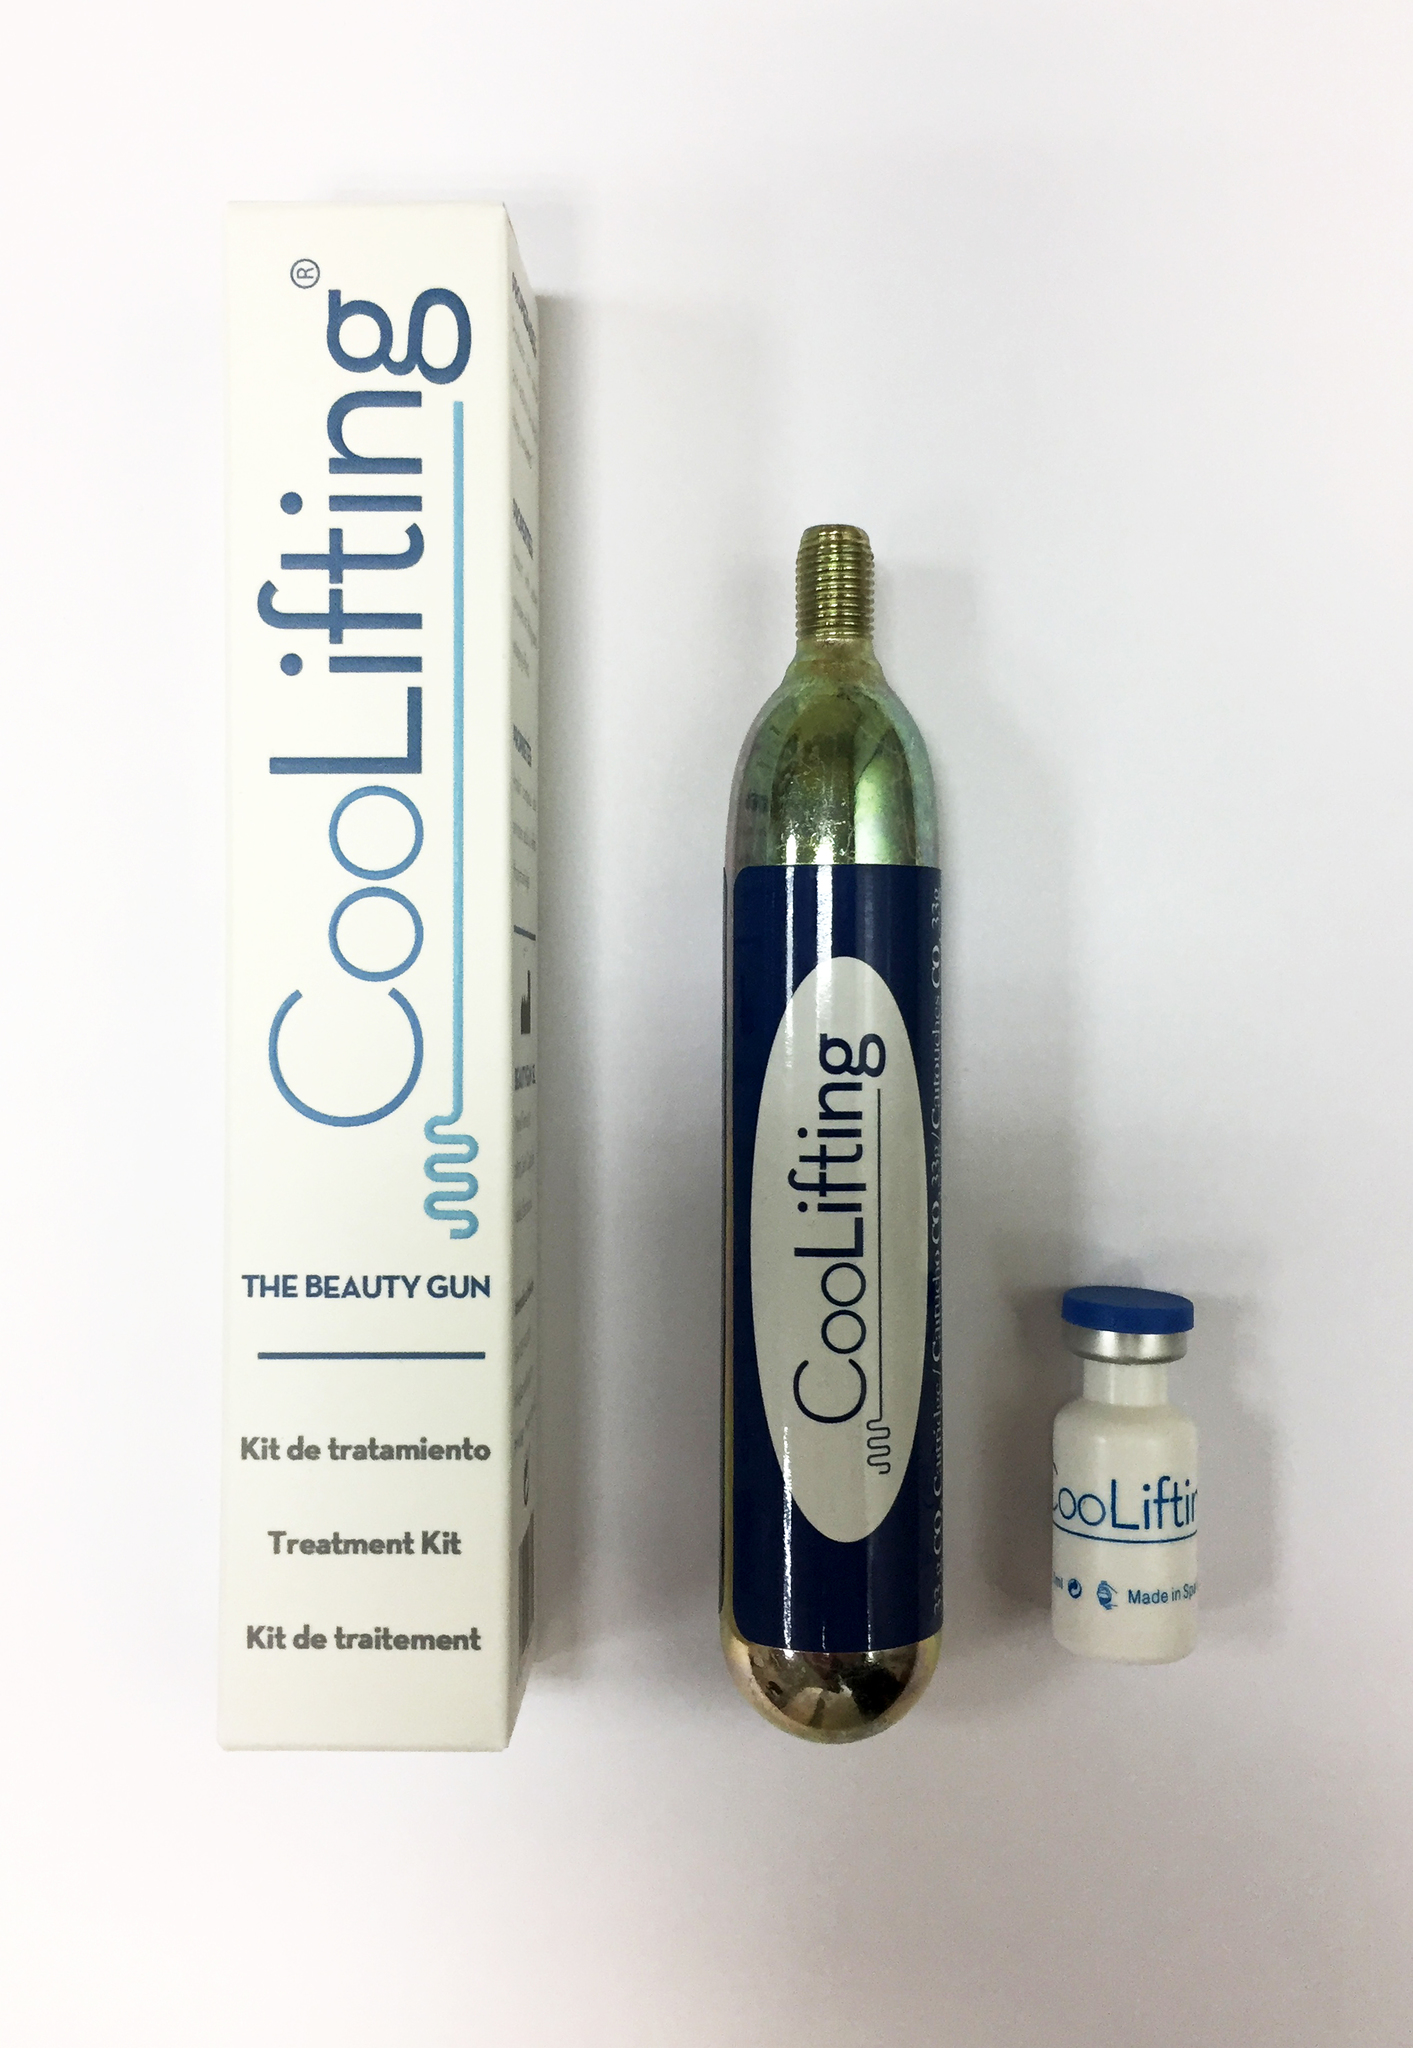 COOLIFTING treatment kit